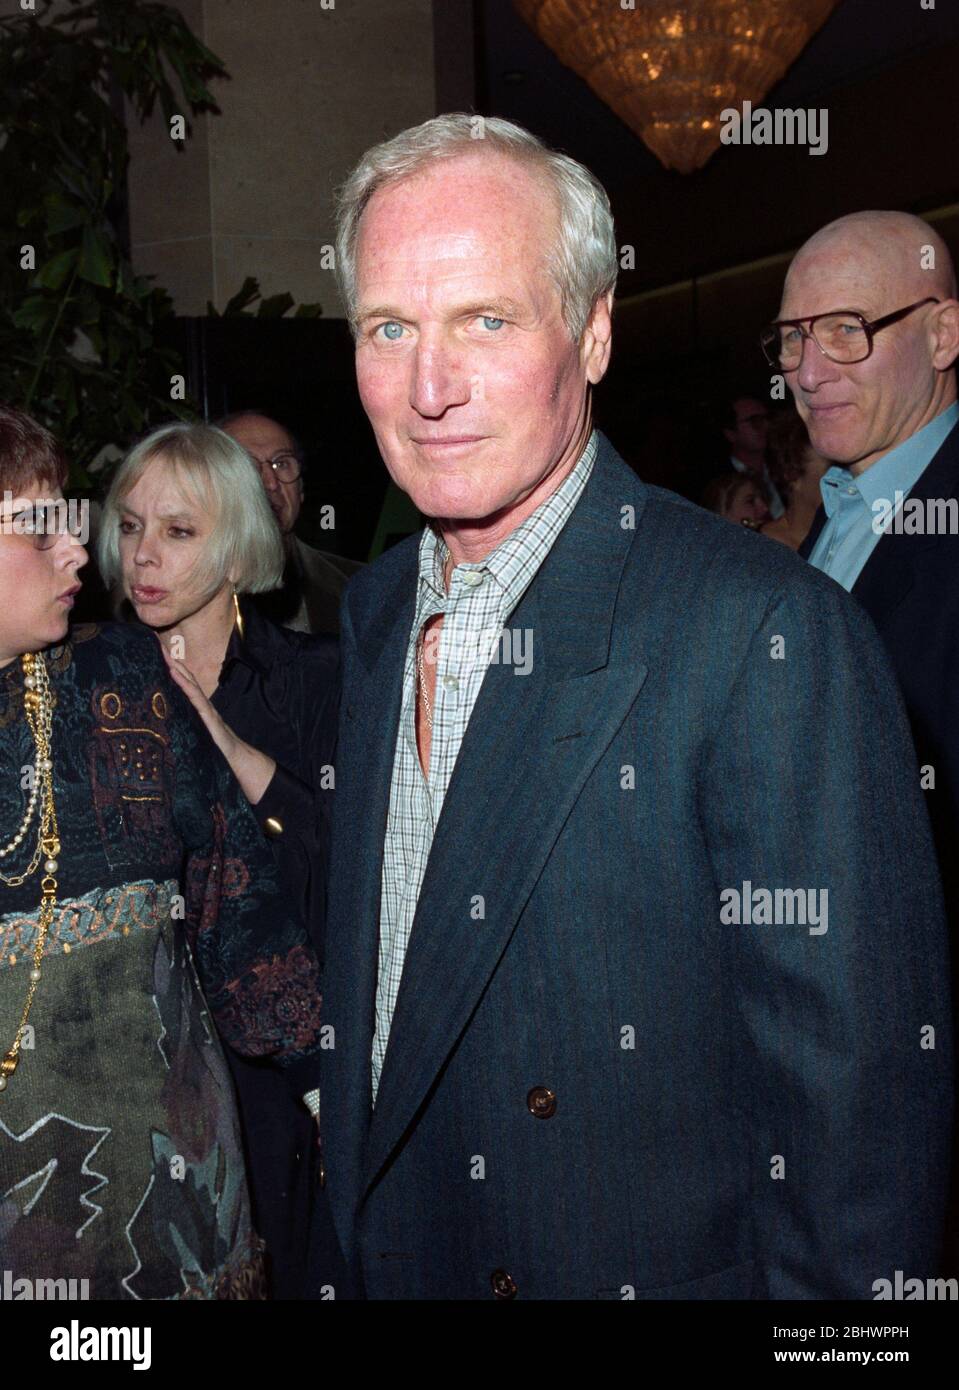 LOS ANGELES, CA. c.1992: Actor Paul Newman. File photo © Paul Smith/Featureflash  Stock Photo - Alamy